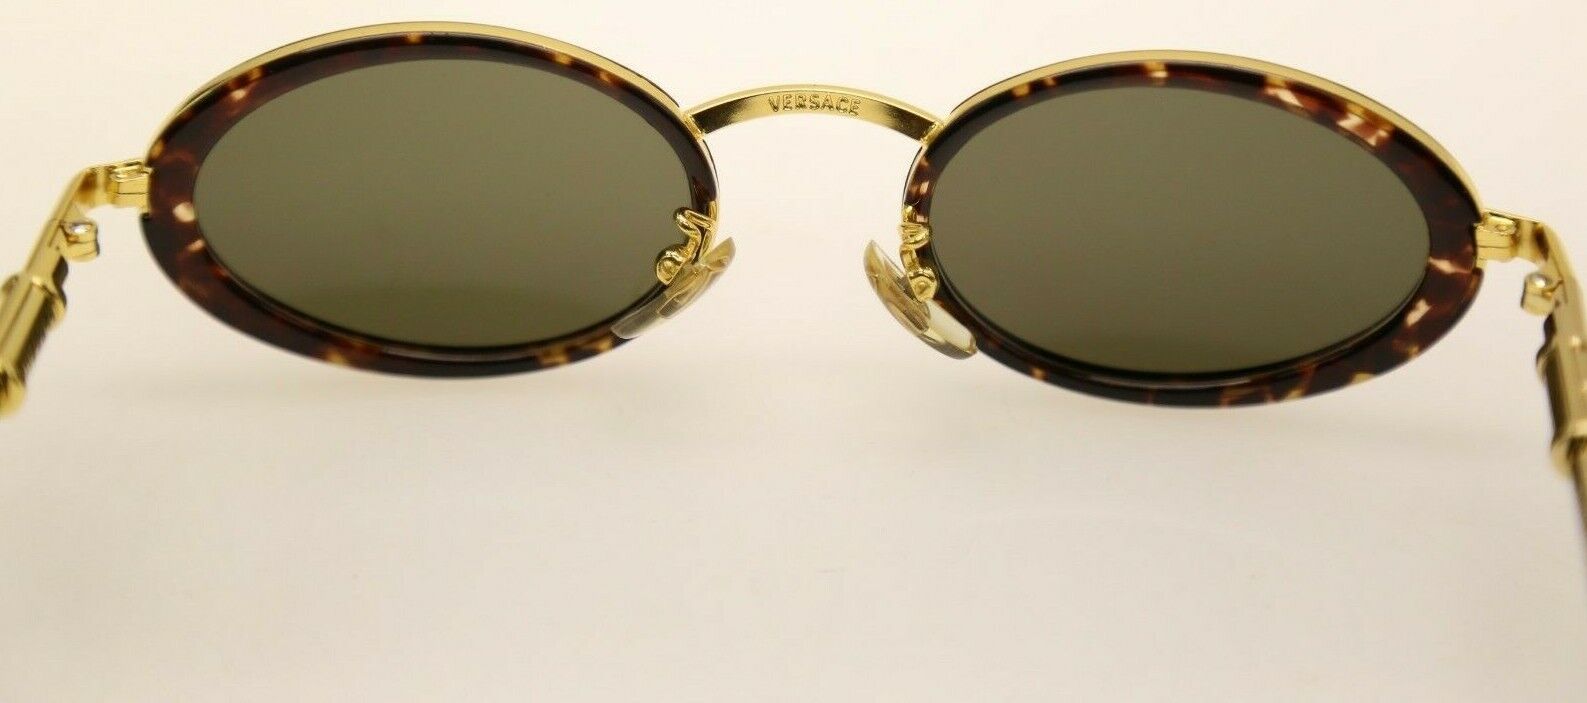 GIANNI VERSACE Sunglasses X13 Vintage Oval Gold Baroque Medusa 